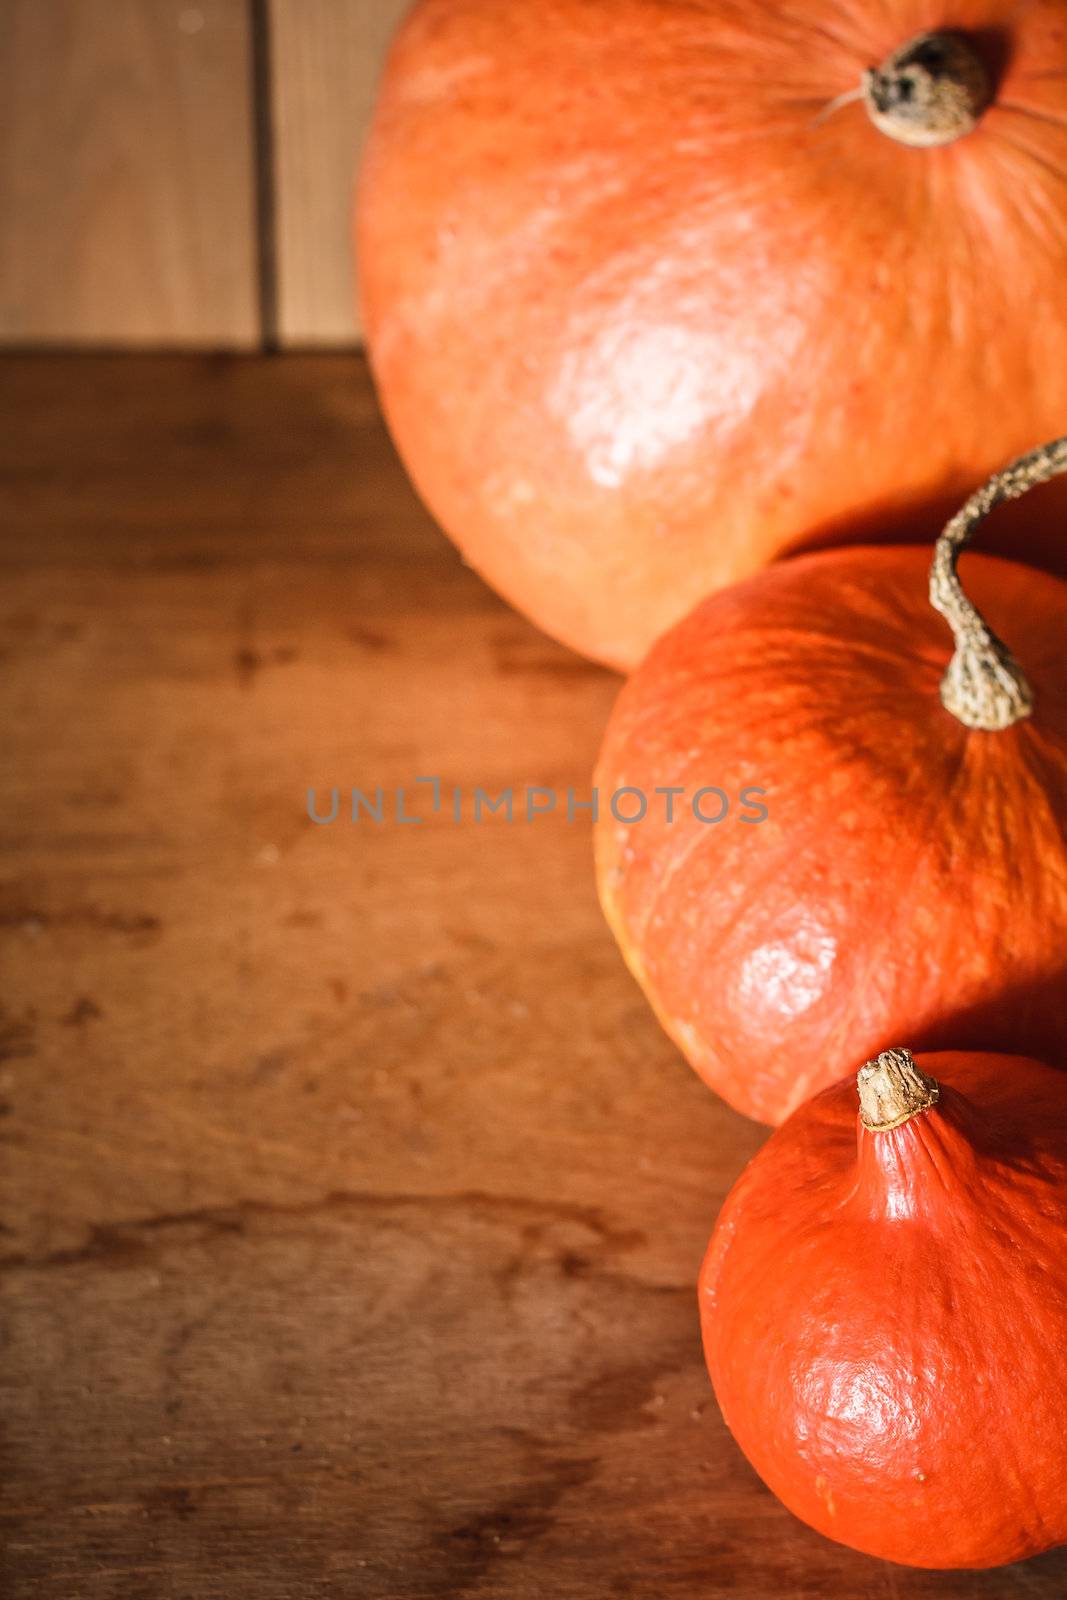 Pumpkins on grunge wooden backdrop, background table. Autumn, halloween, pumpkin, copyspace